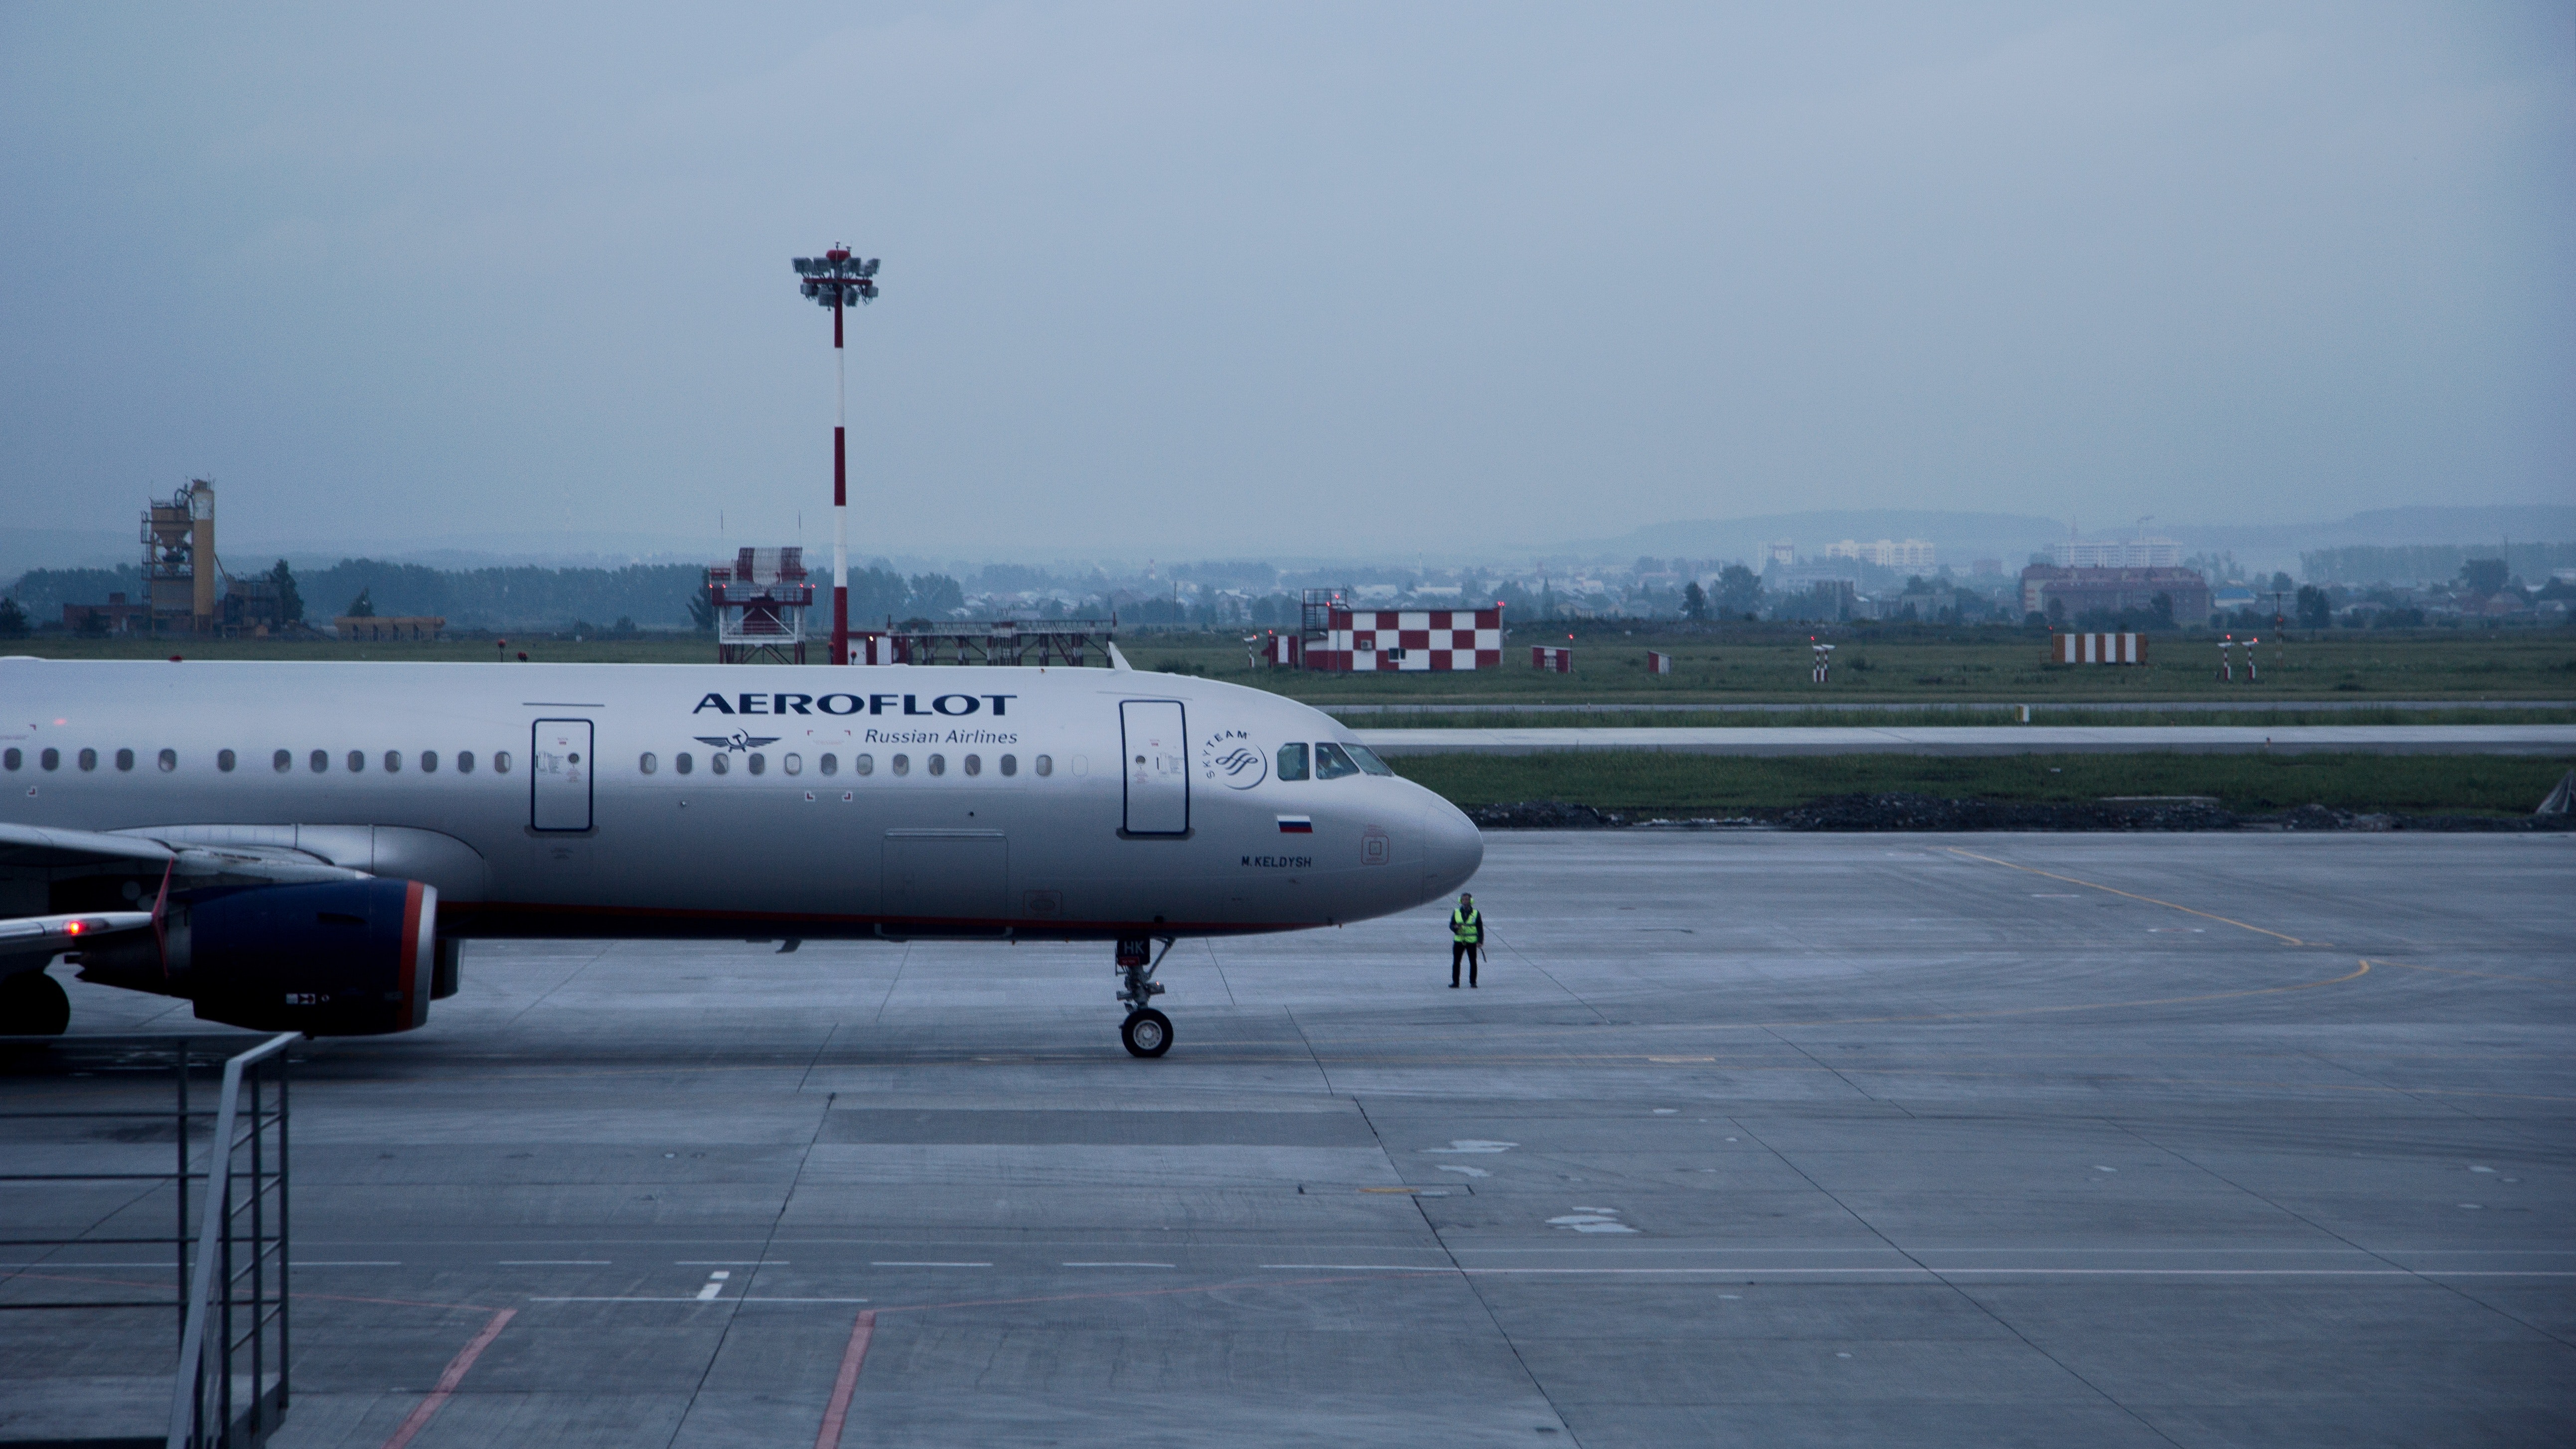 White Aeroflot Passenger Plane on Airport, Aeroflot, Large, Travel, Transportation system, HQ Photo